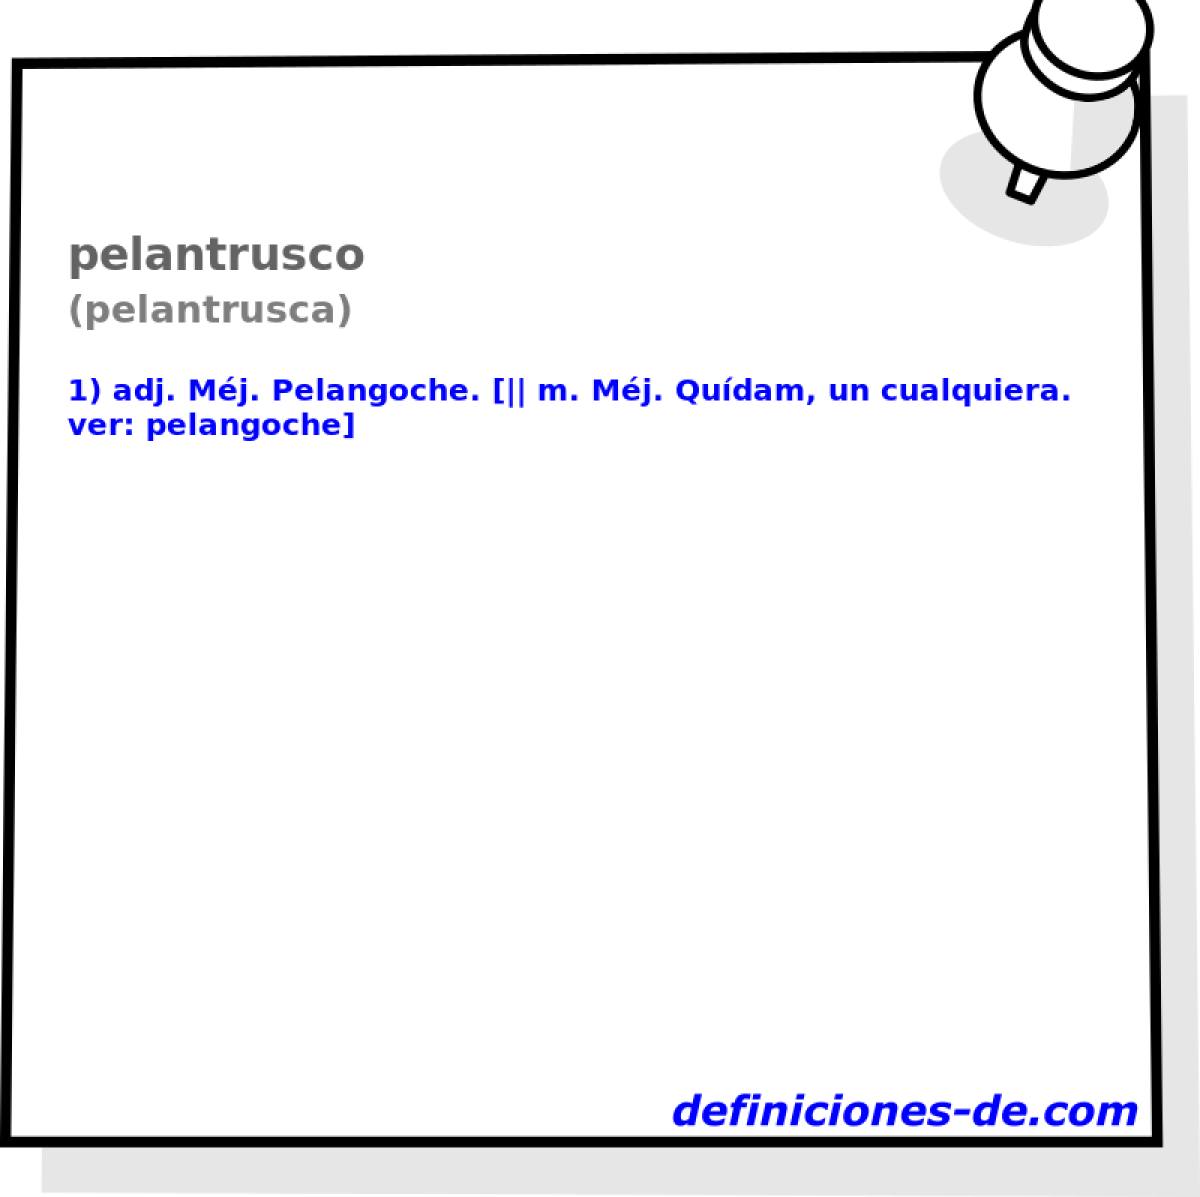 pelantrusco (pelantrusca)